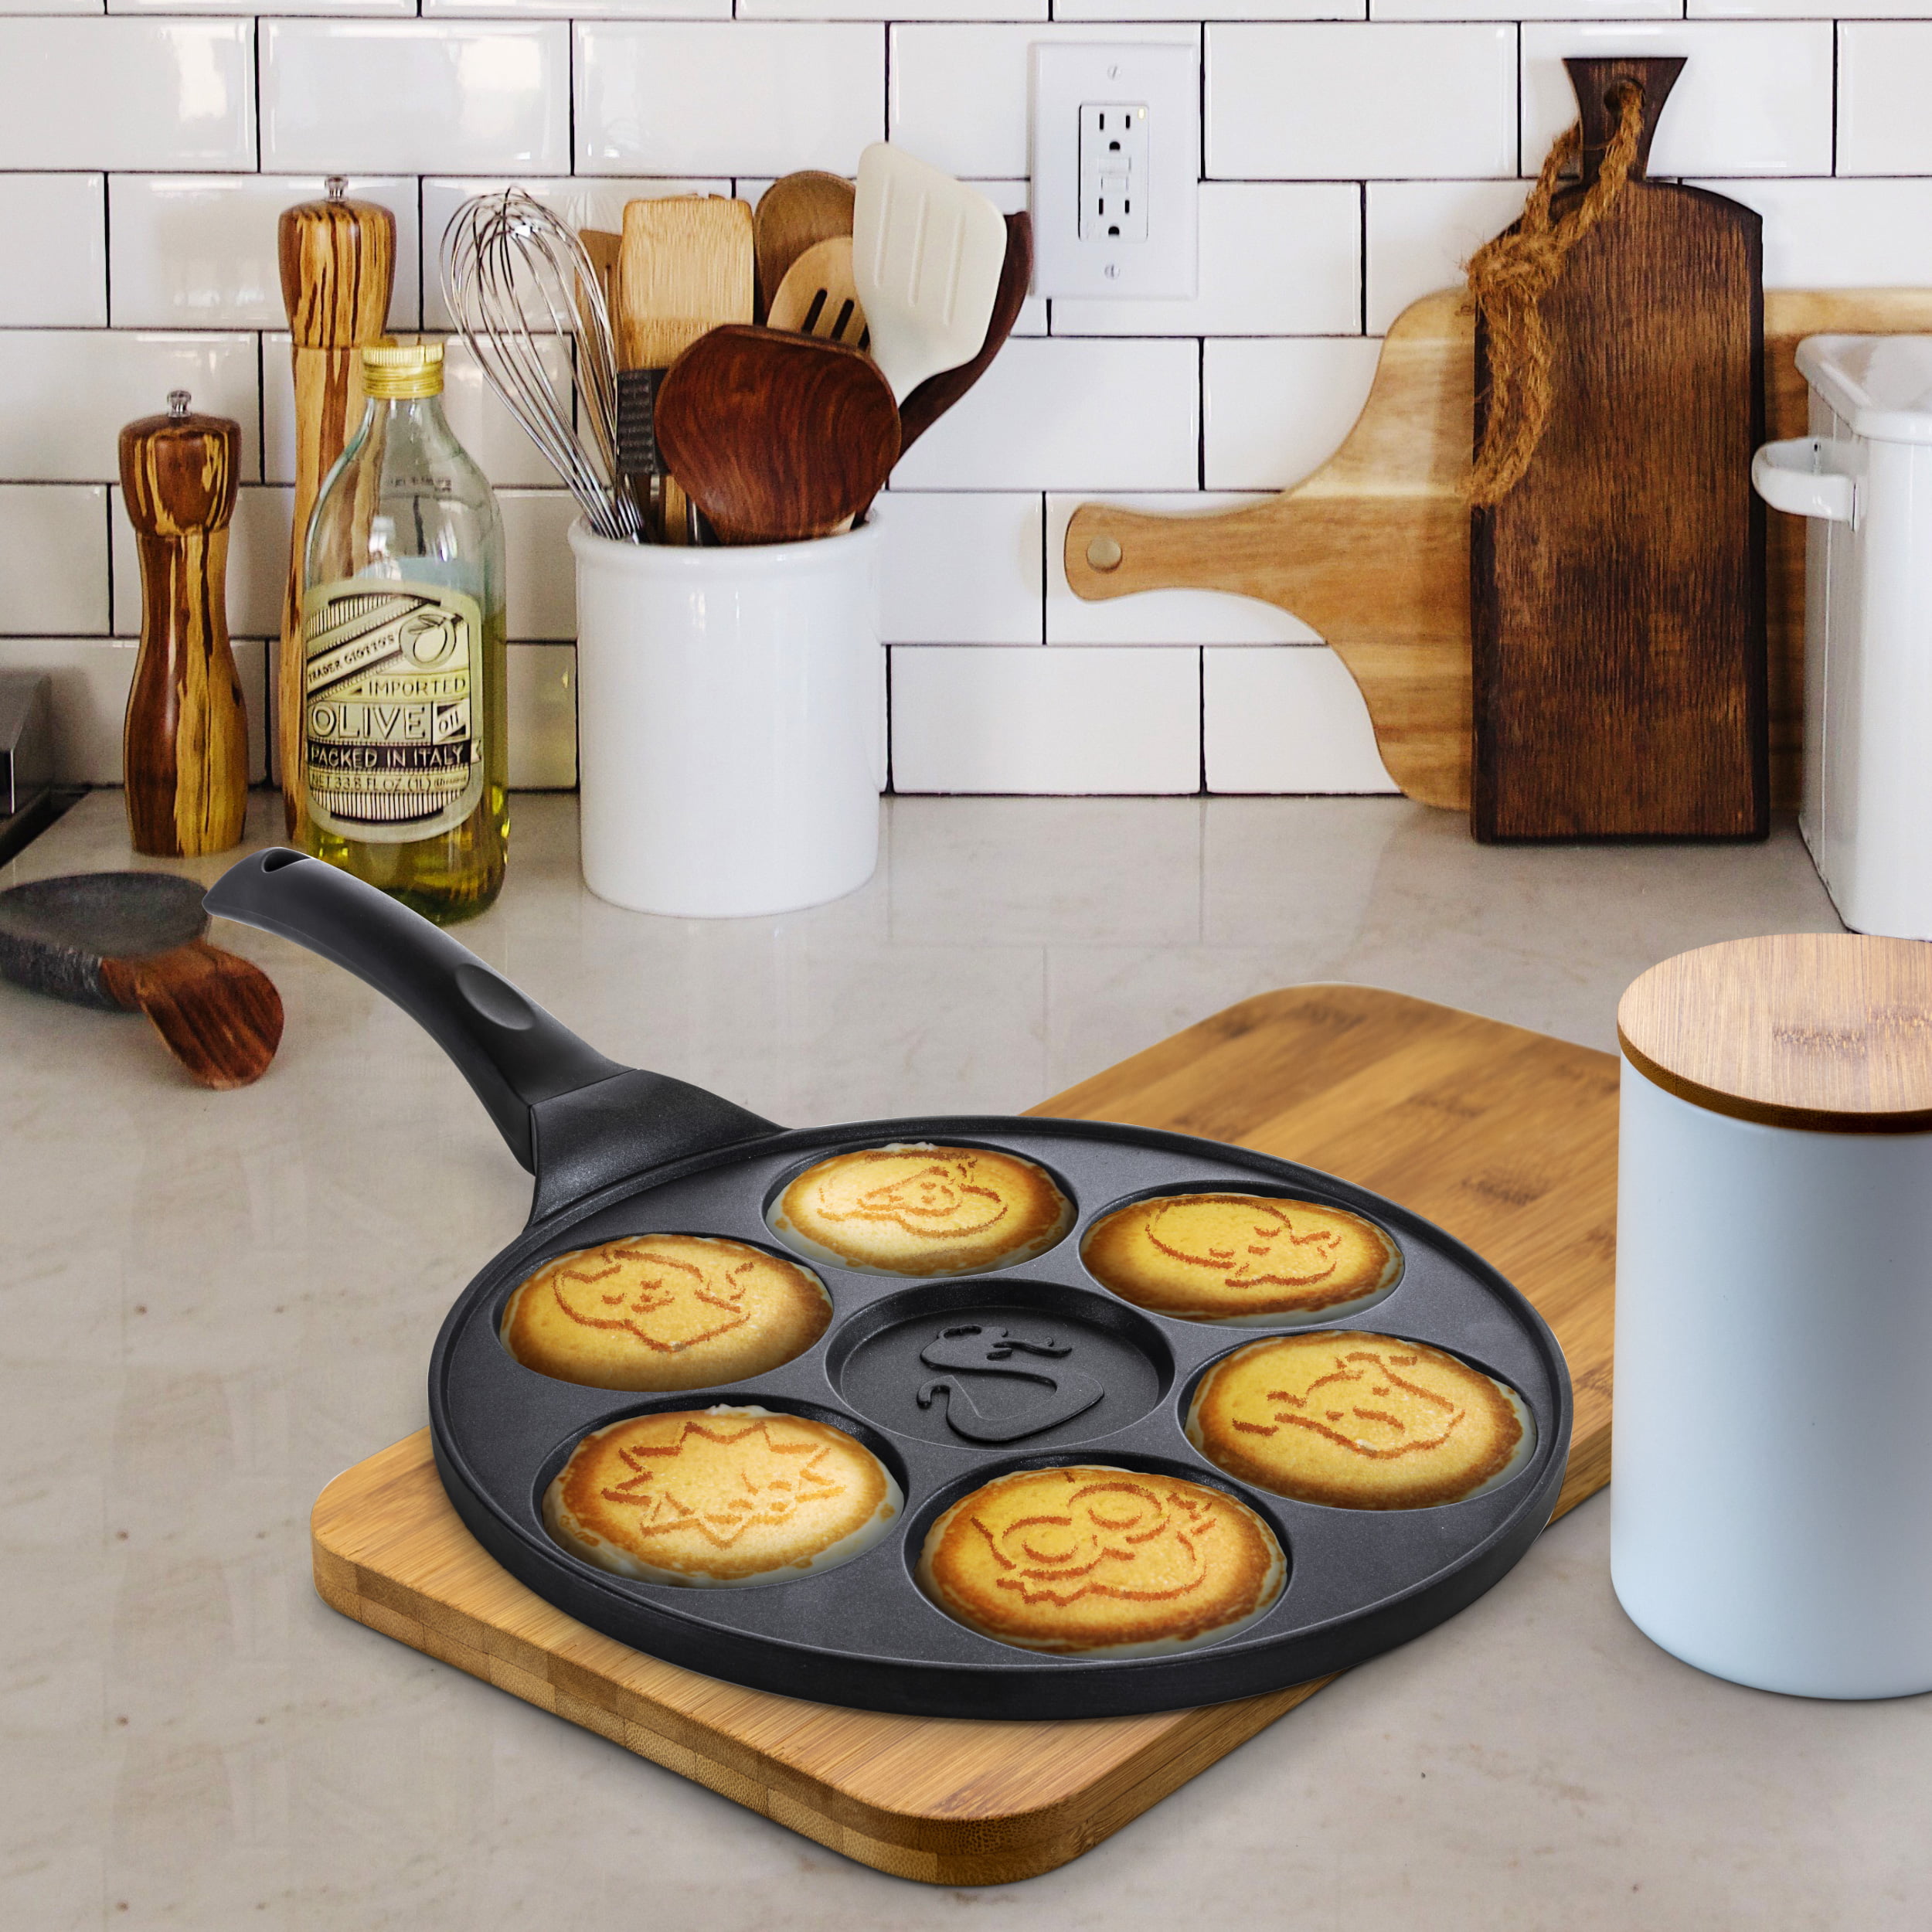 PANCAKE MAKER PAN Nonstick Breakfast Griddle Mold Blini Skillet 10.5 Inch  CAINFY